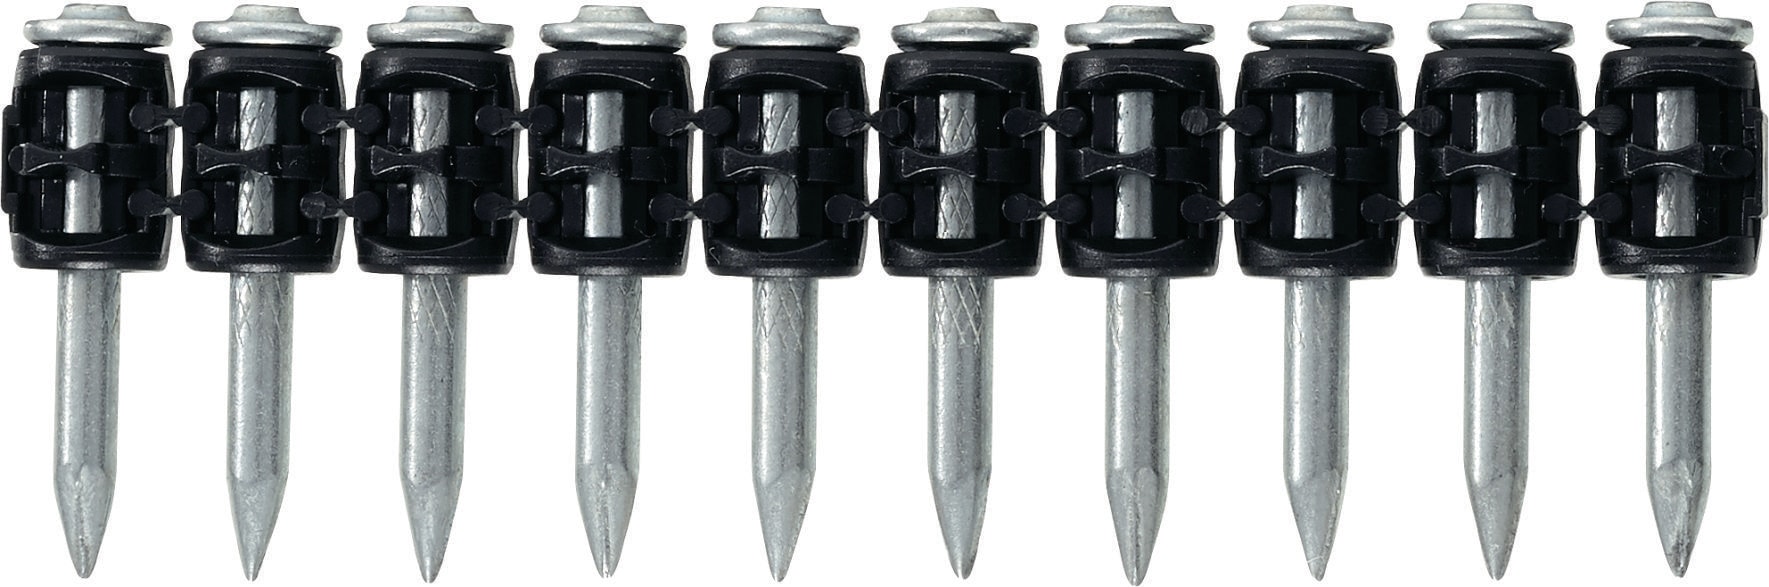 X-C B3 MX Concrete nails (collated) - Nails - Hilti Hong Kong